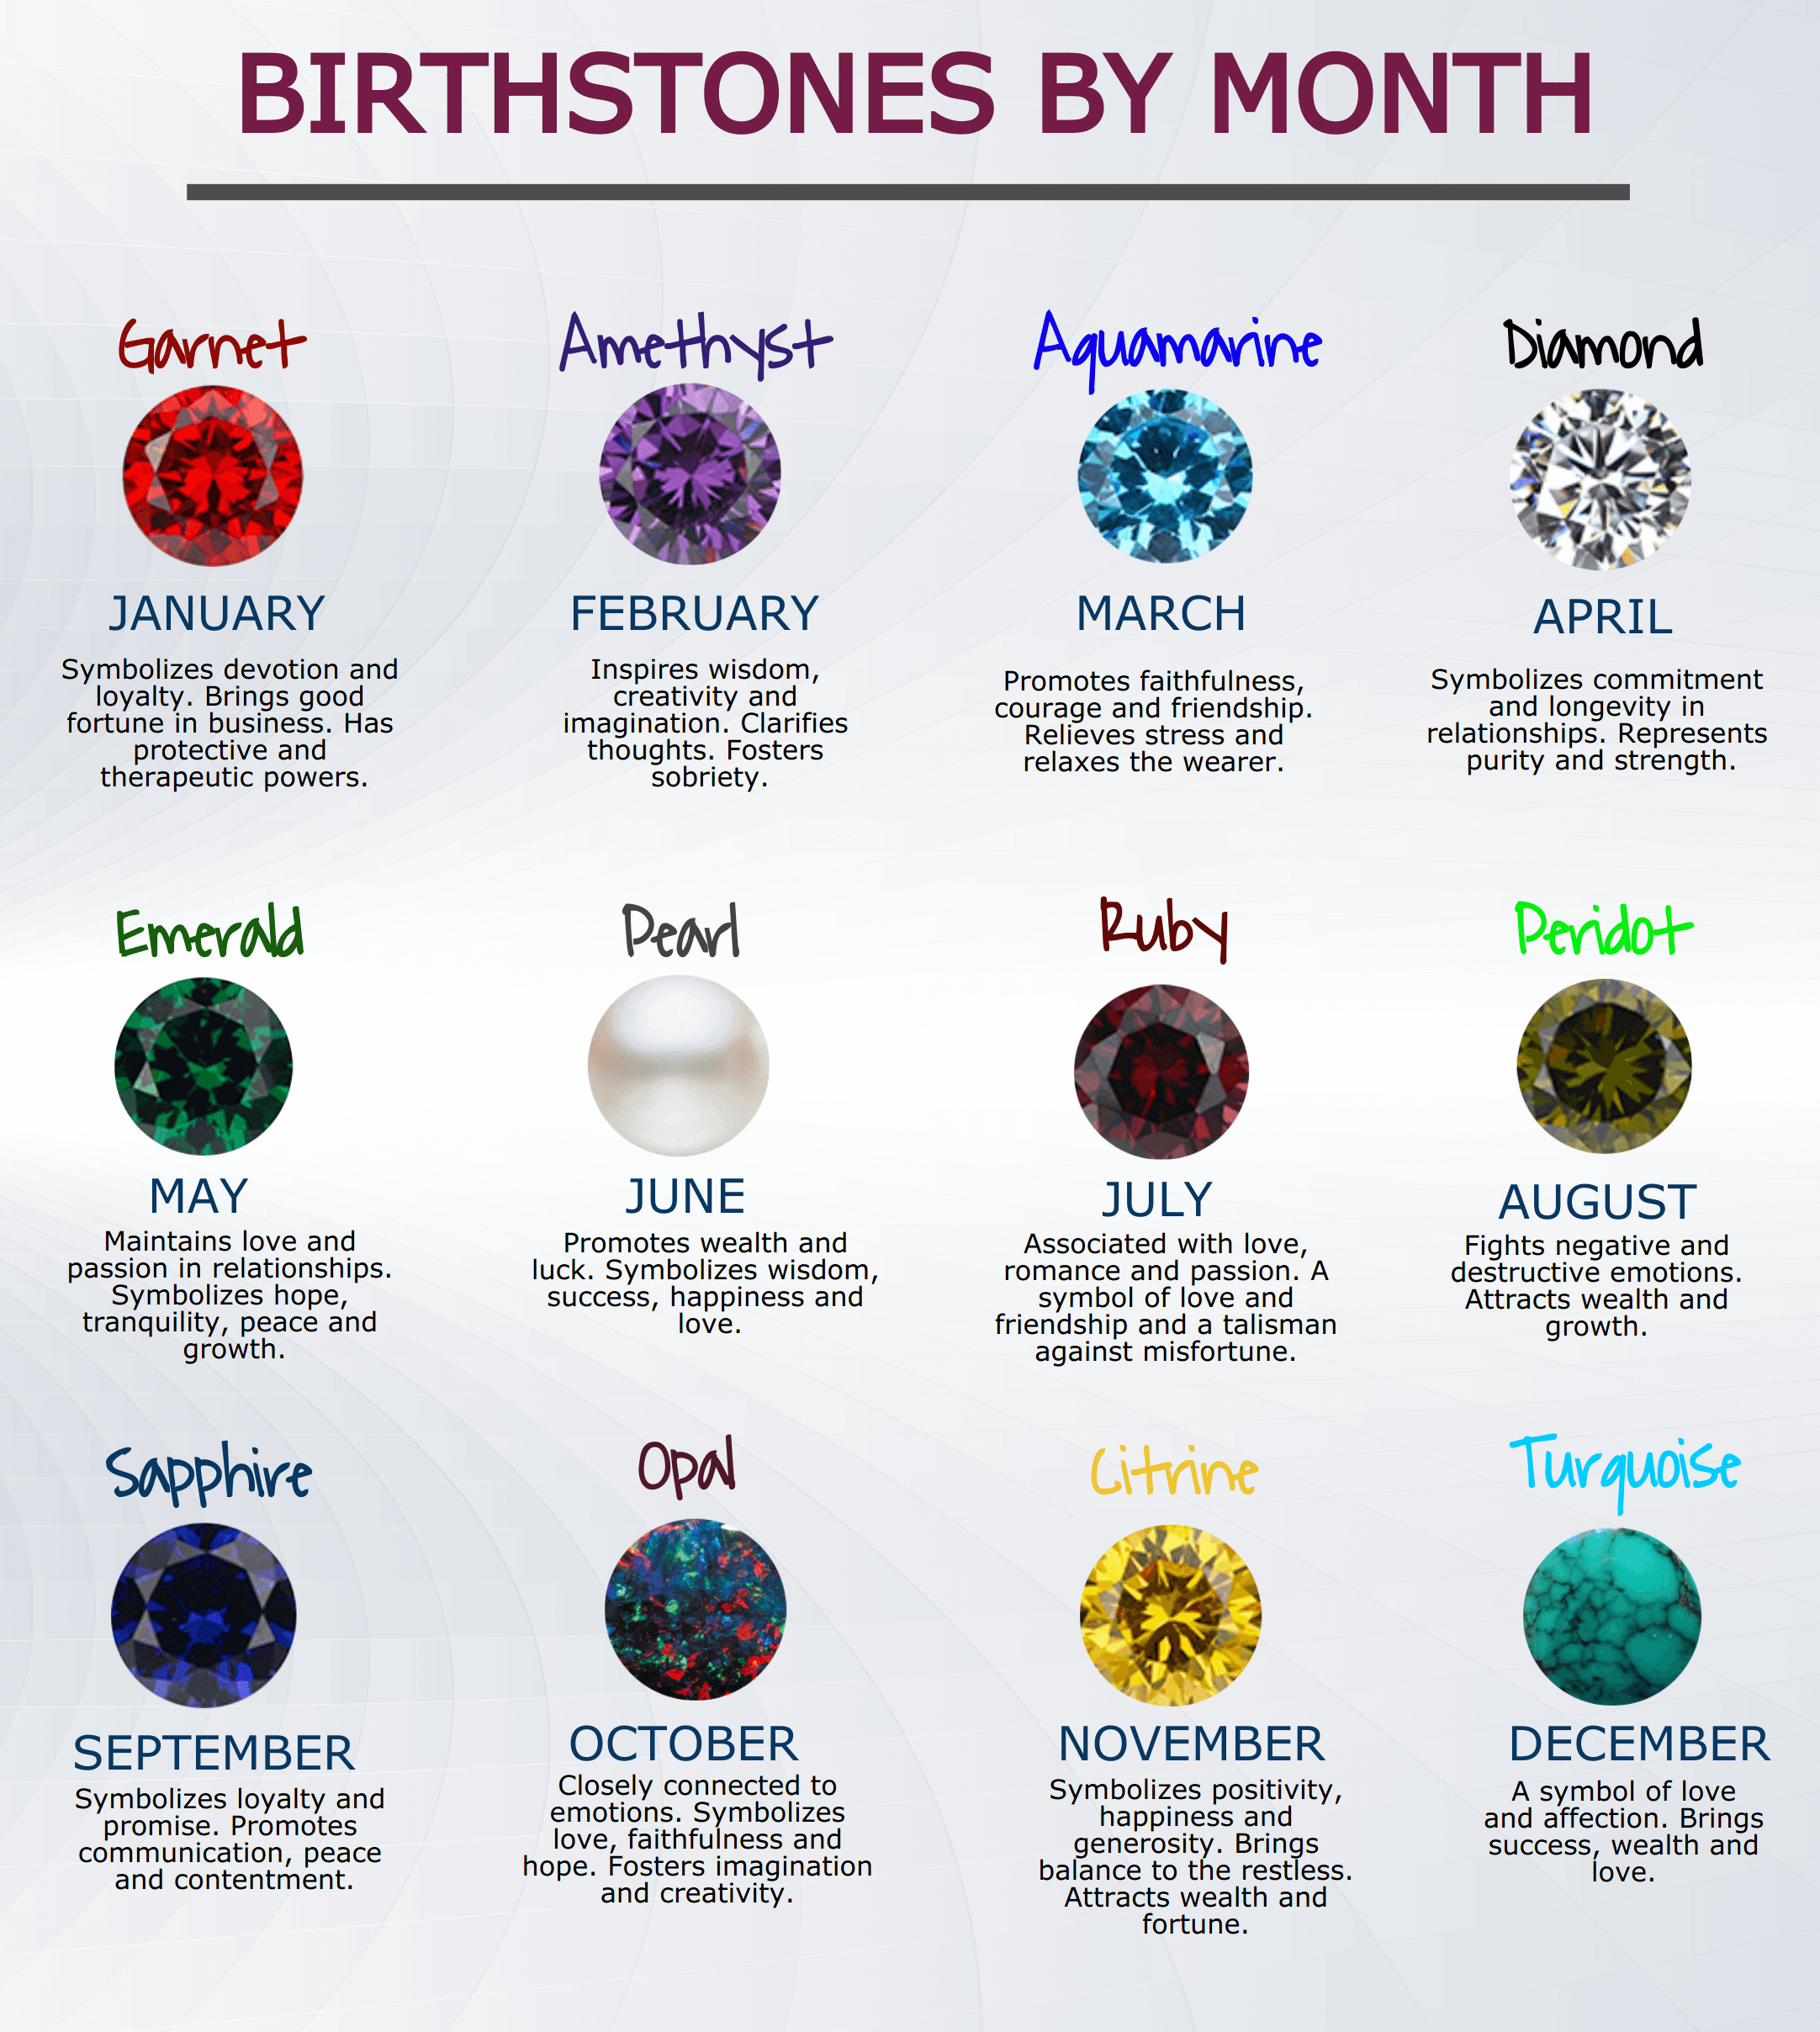 Birthstones by Month